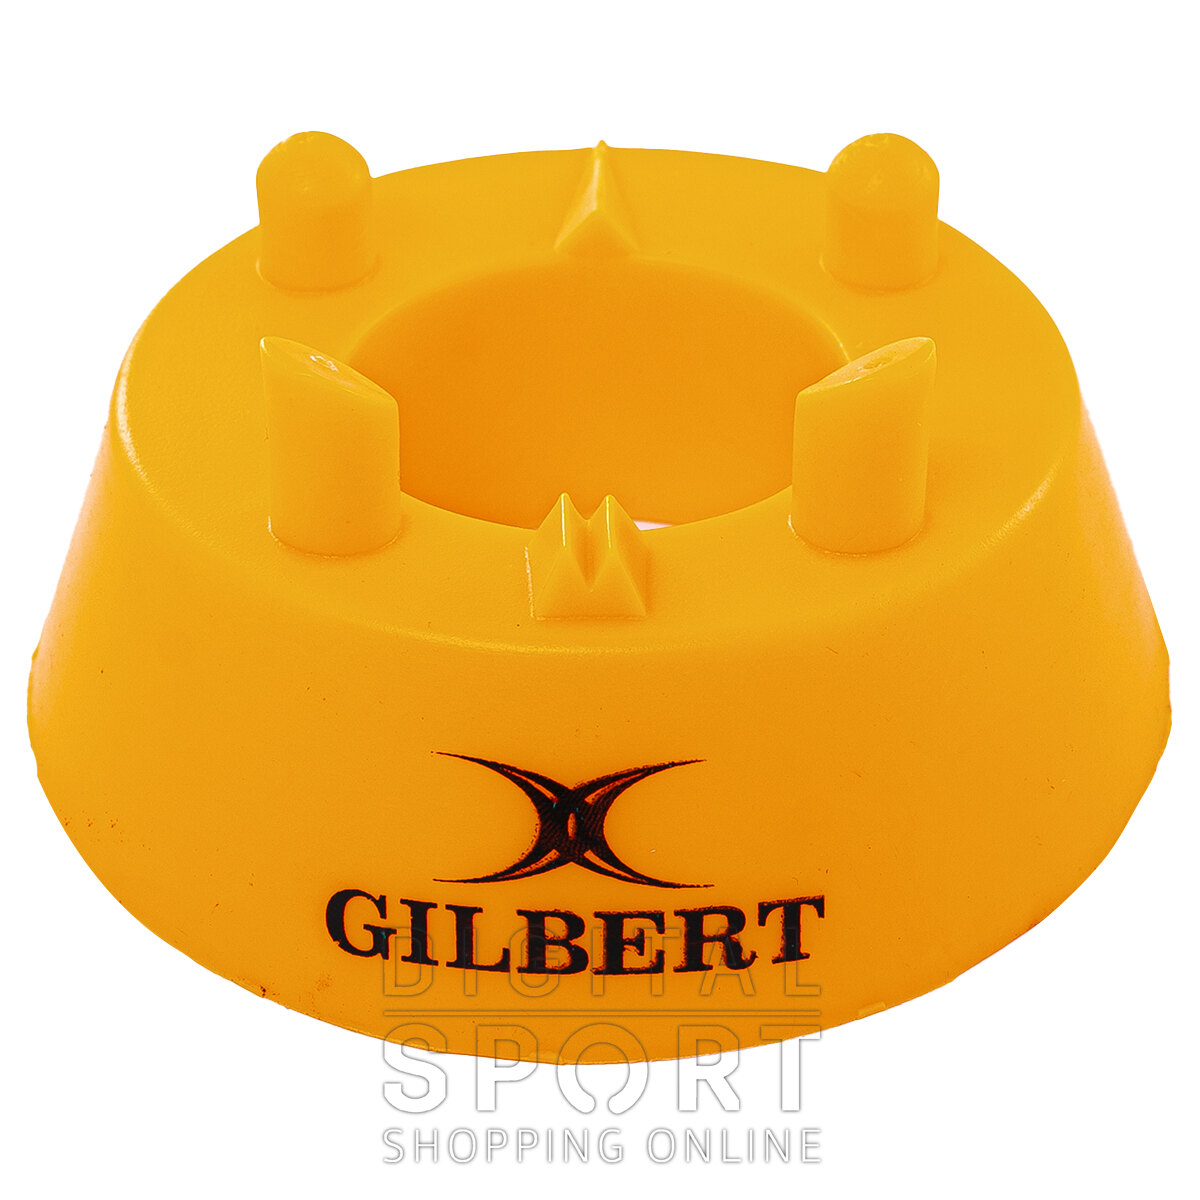 Gilbert 450 Precision Kicking Tee Black